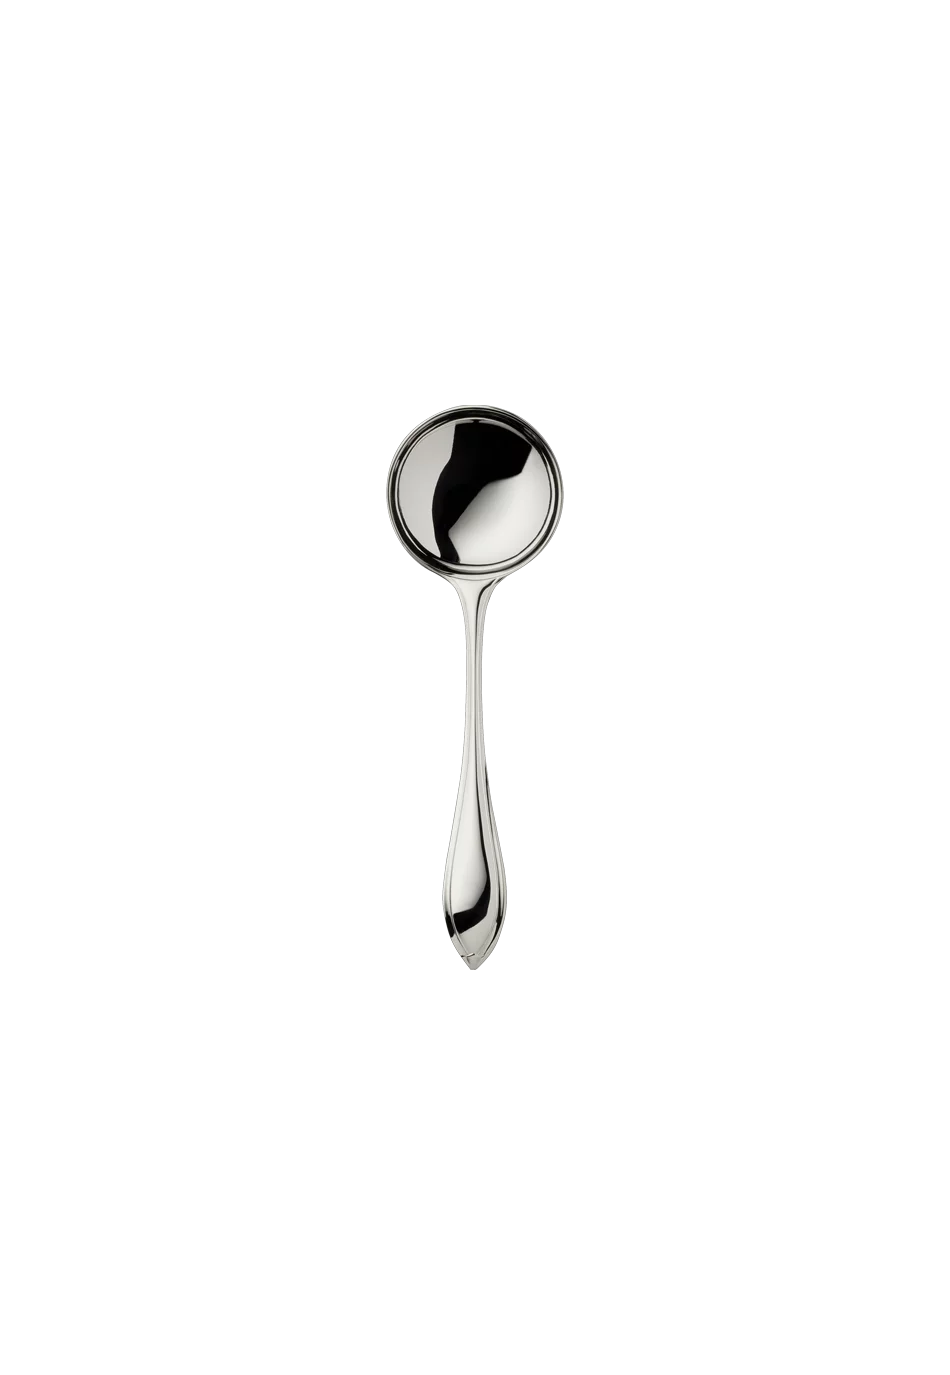 Navette Sugar Spoon (150g massive silverplated)